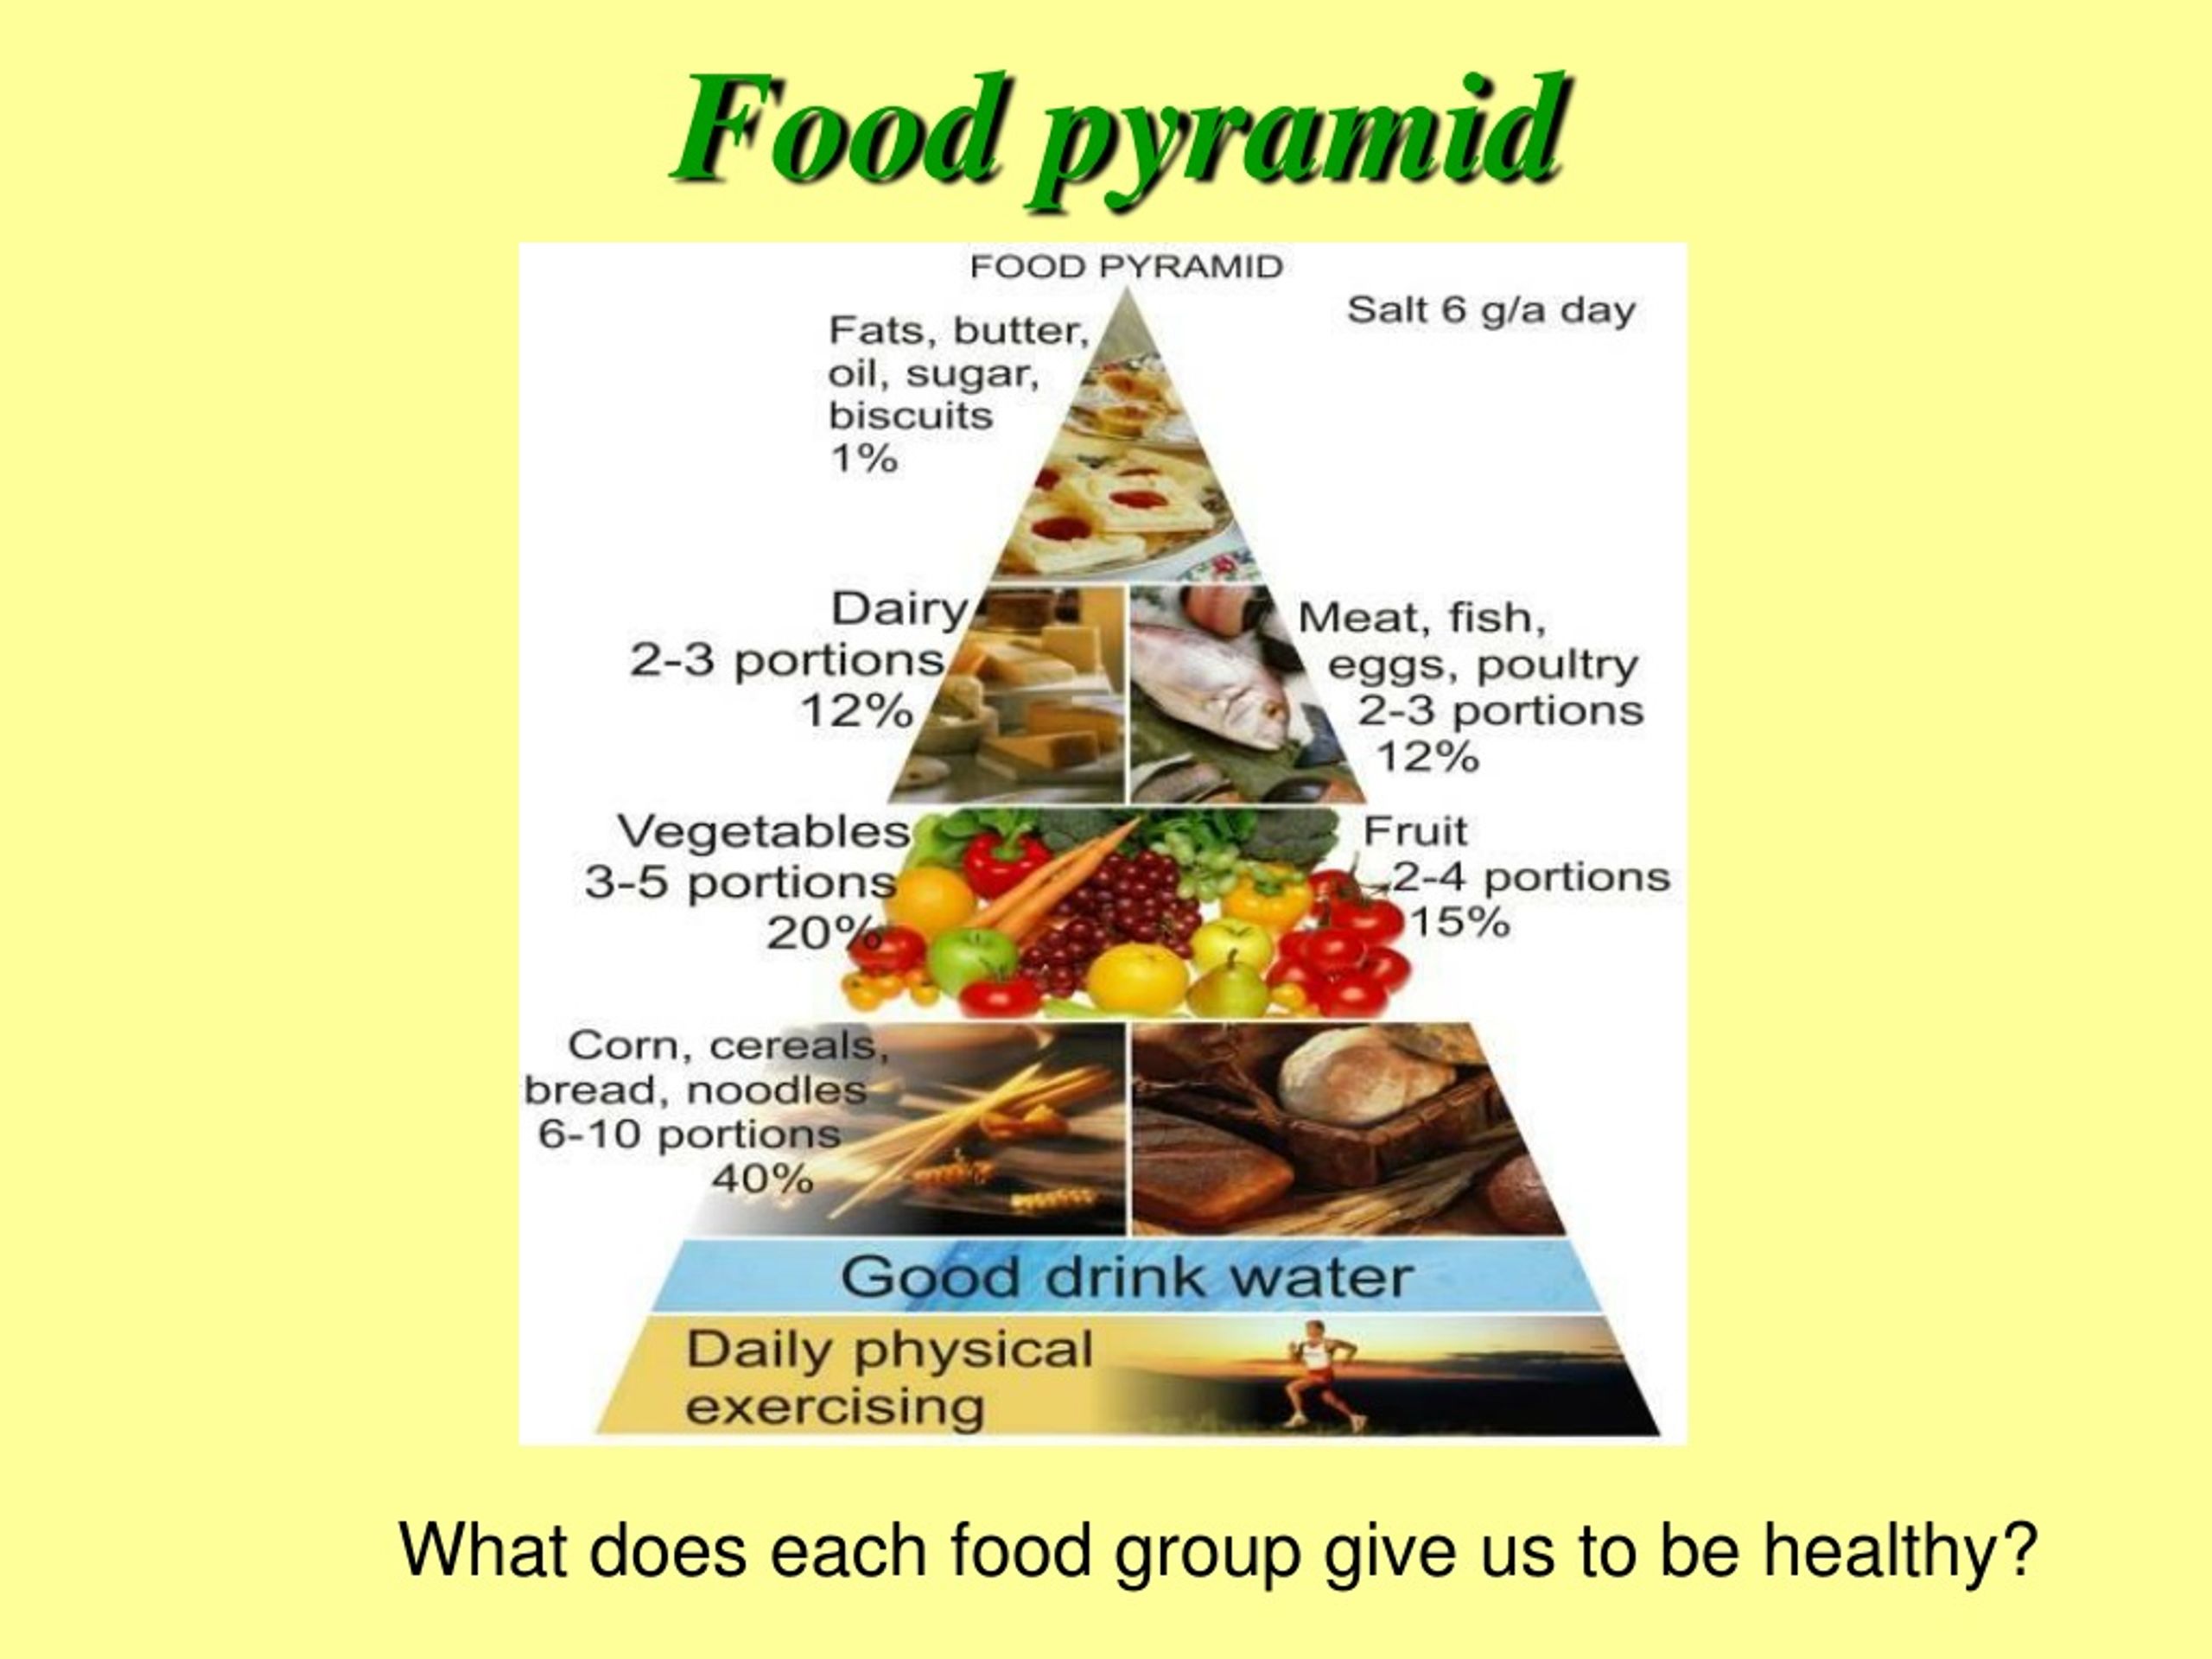 Фуд текст. Пирамида питания на английском. Здоровое питание на английском языке. Здоровая пища на английском языке. Пирамида еды по английскому.